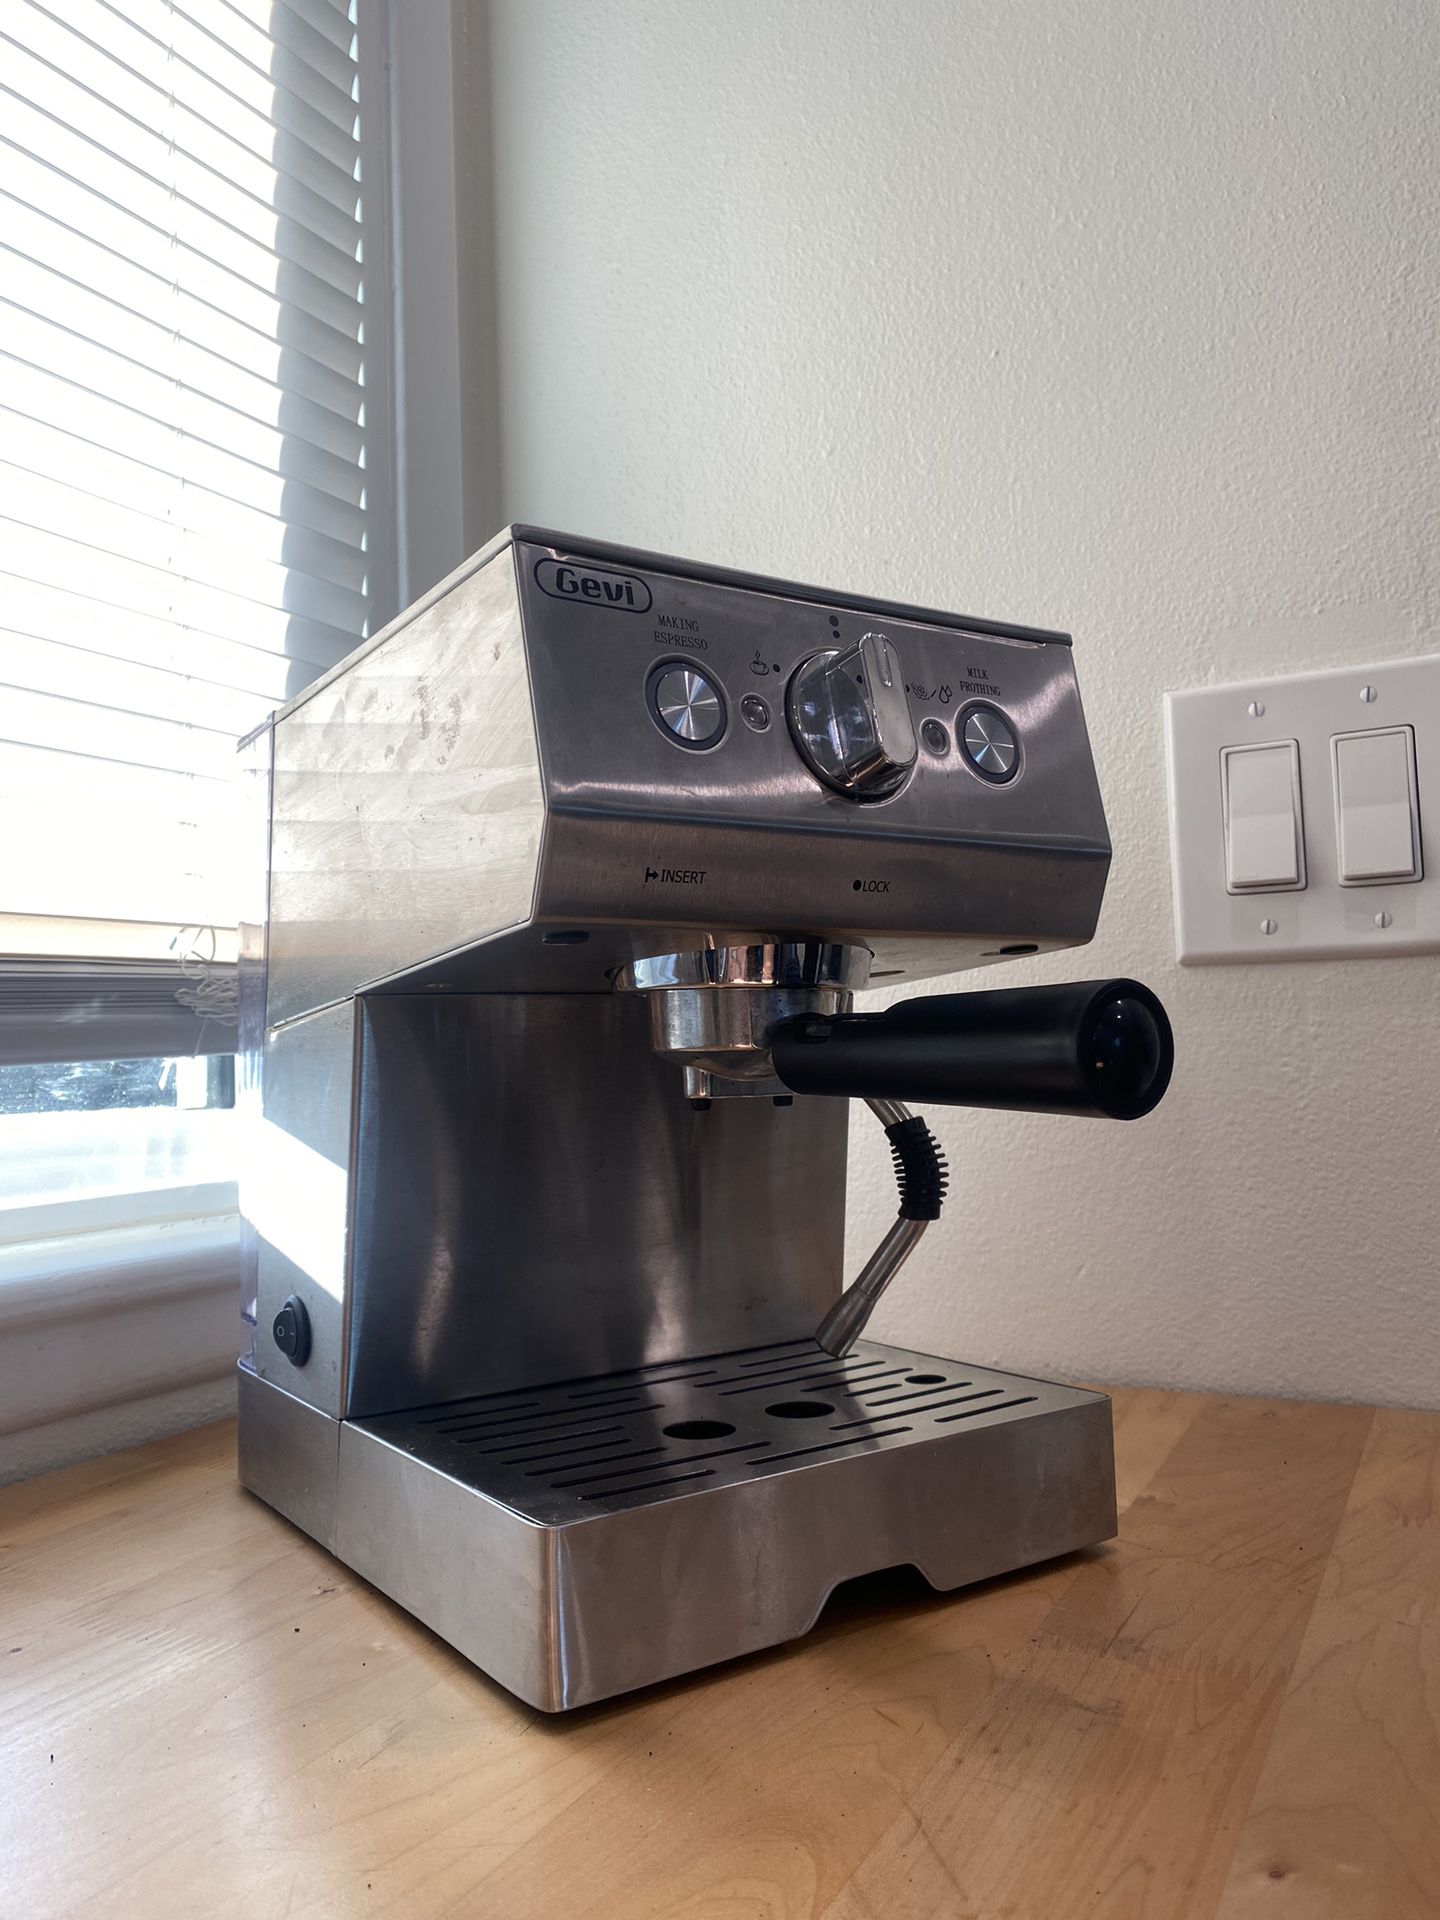 Gevi Espresso Maker Machine